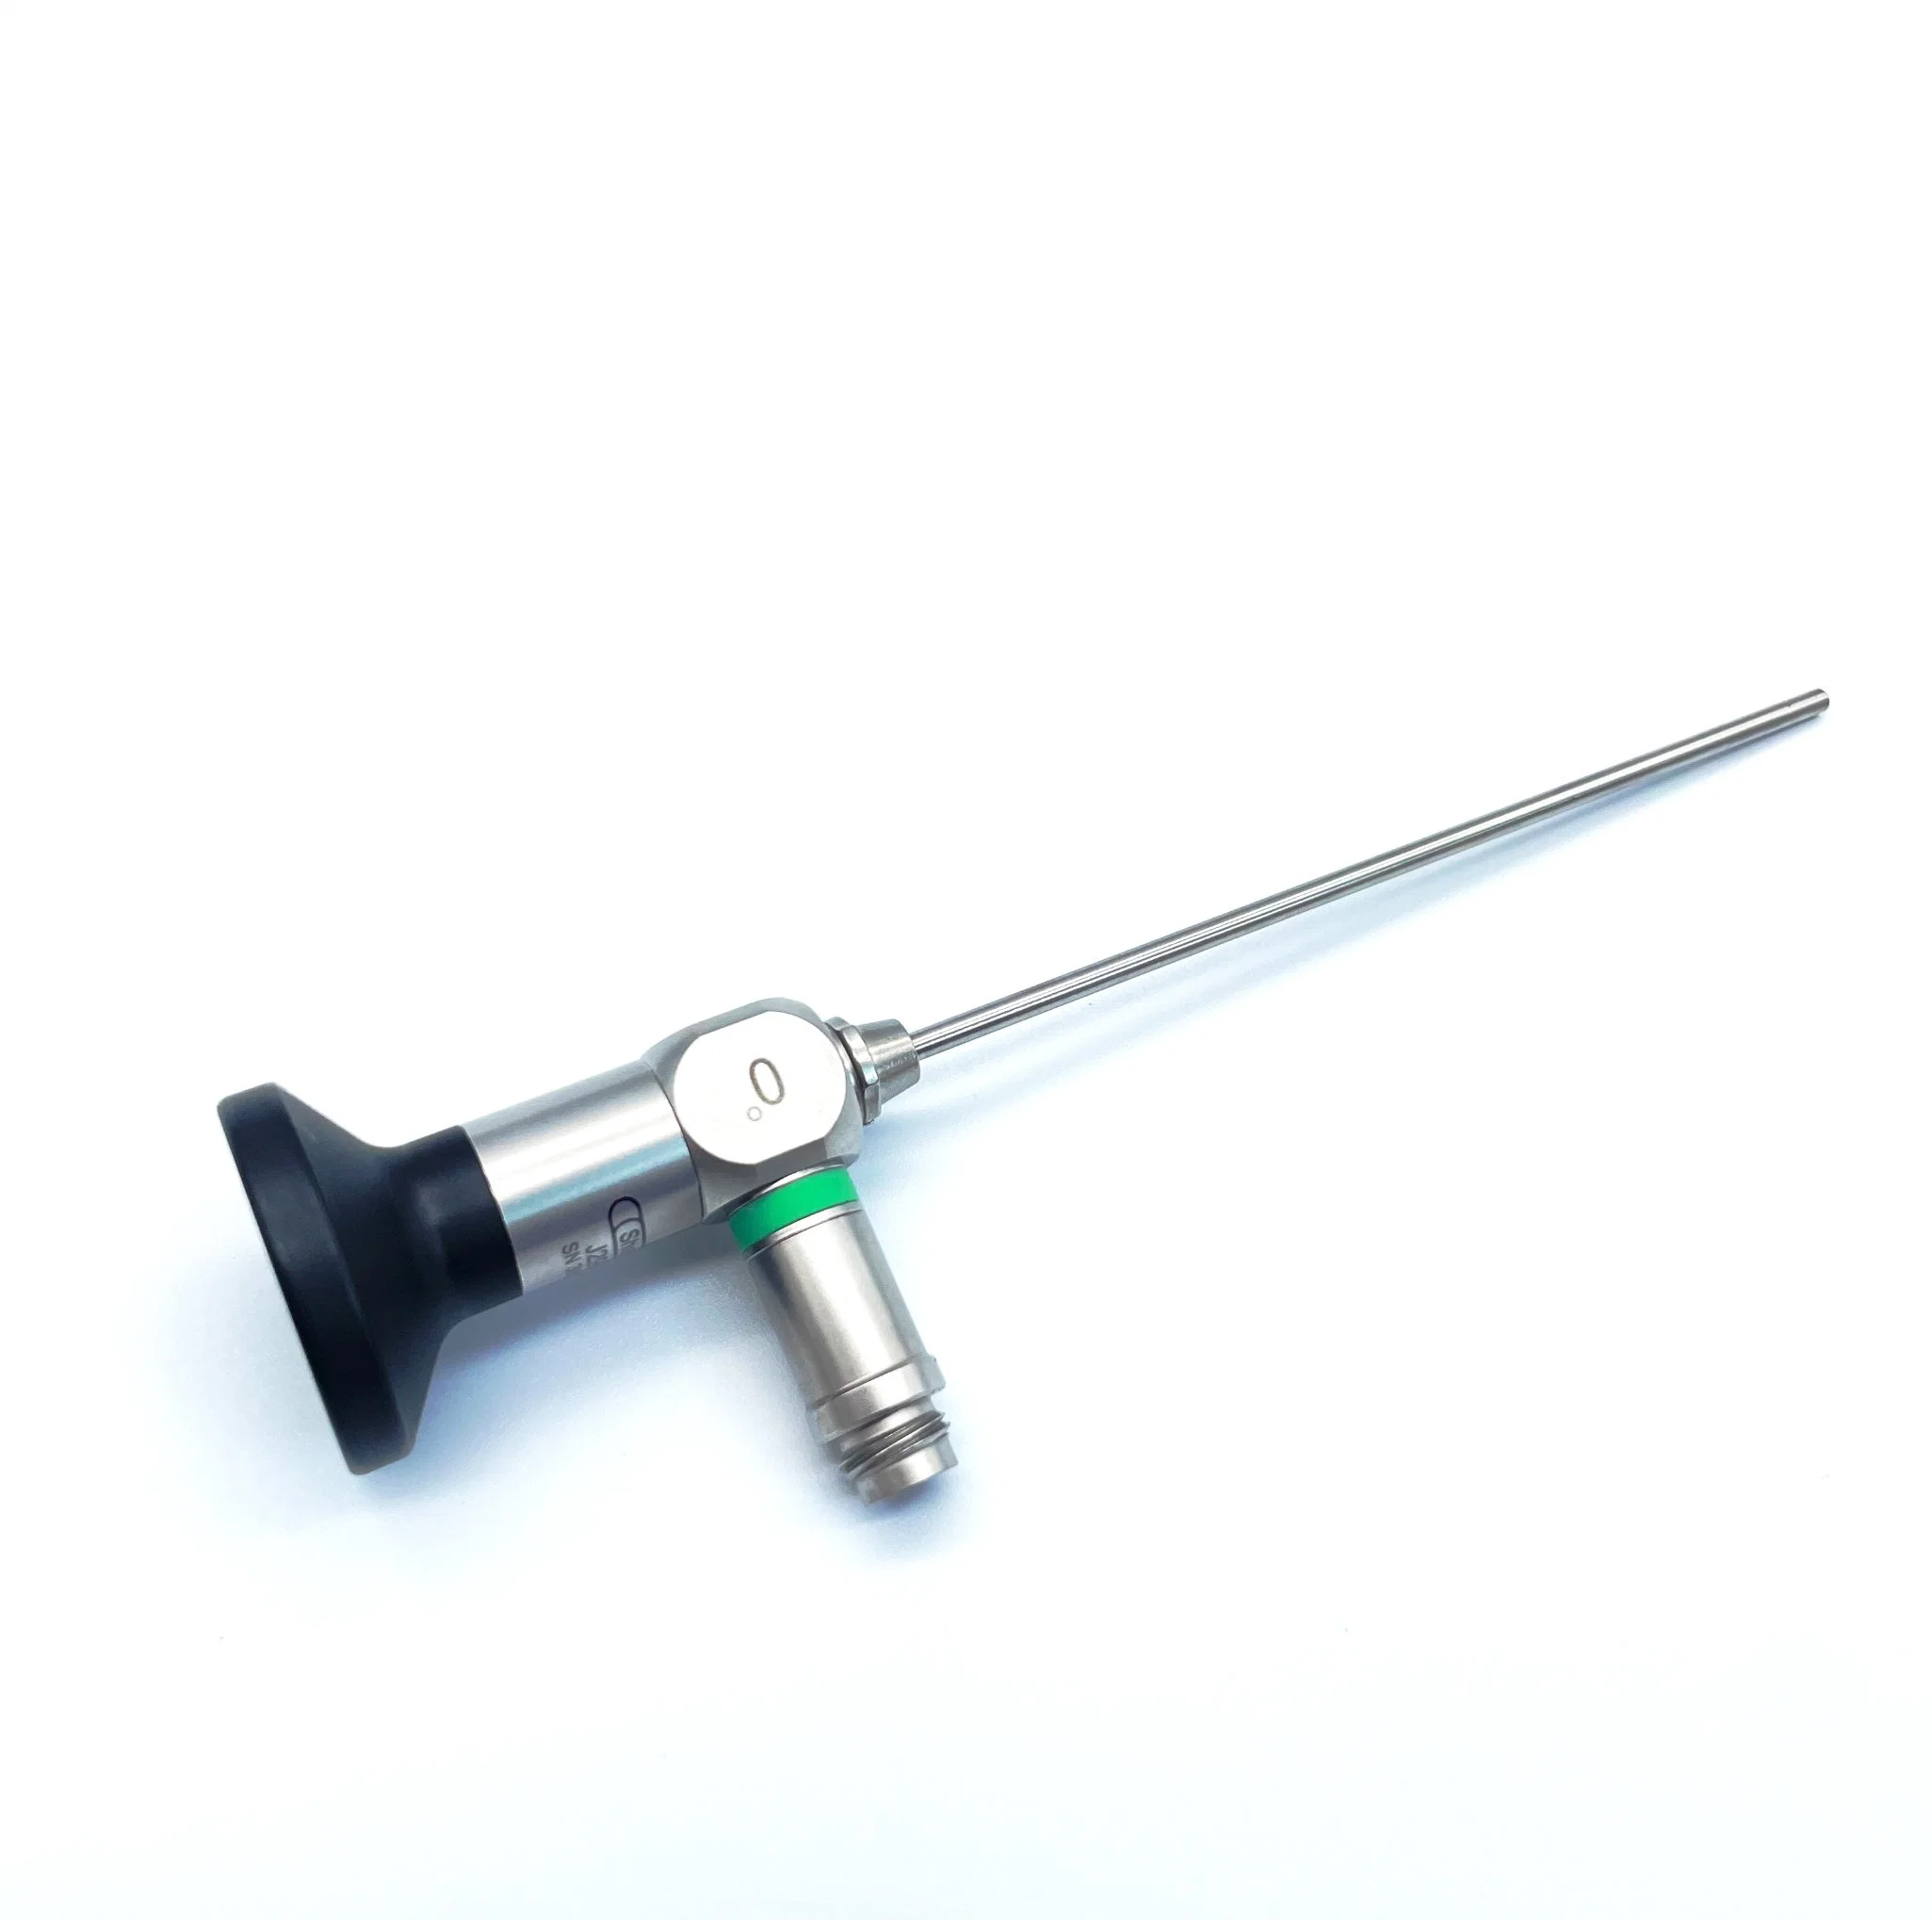 Otoscope 2.7mm 110mm Rigid Ent Medical Endoscope with CE Mark